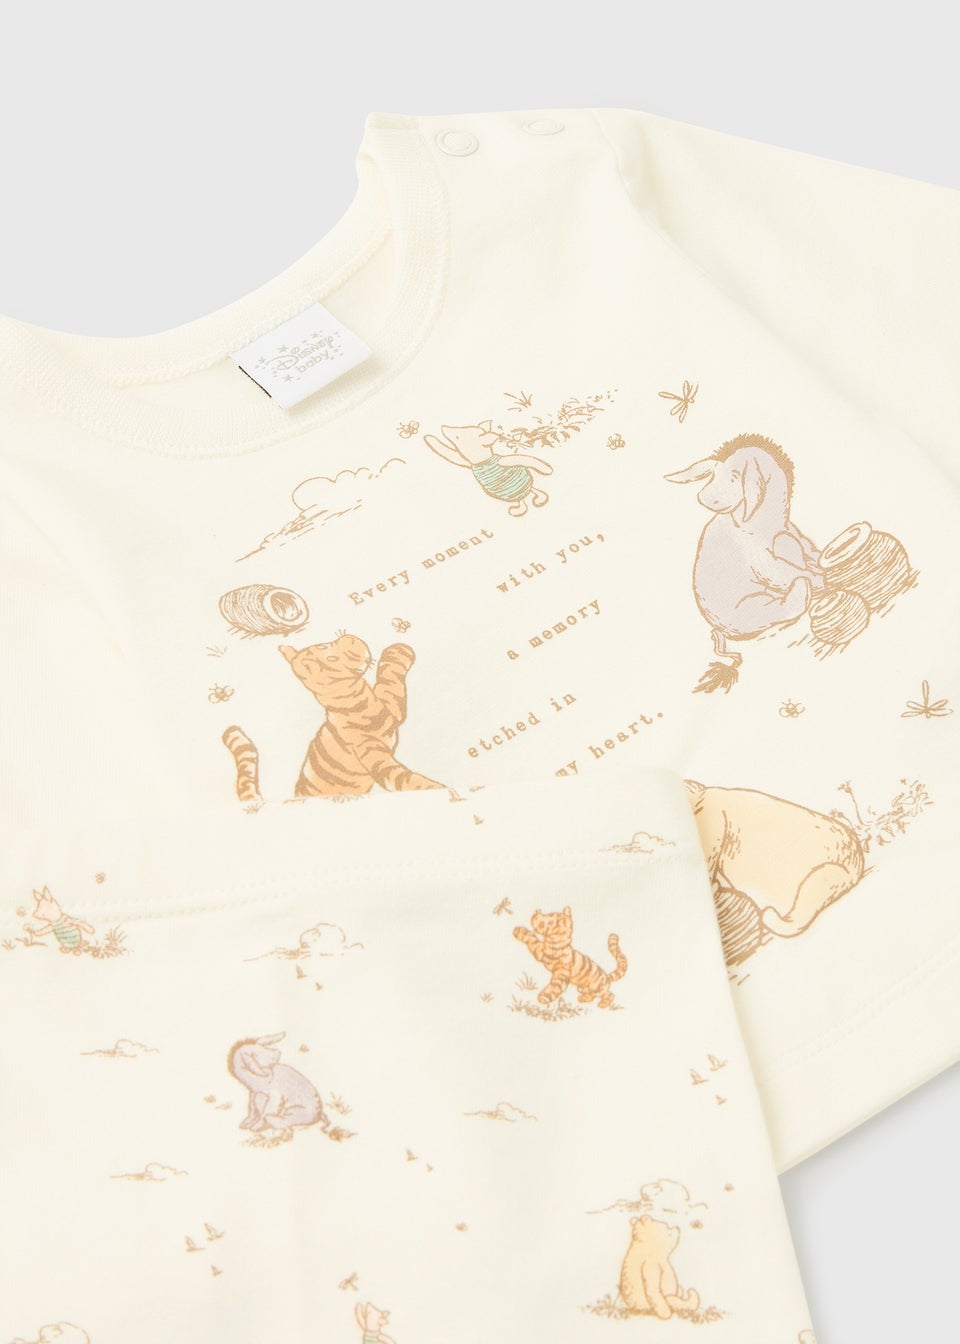 Matalan – Unisex Winnie the Pooh Top & Leggings Set – New Baby Closet